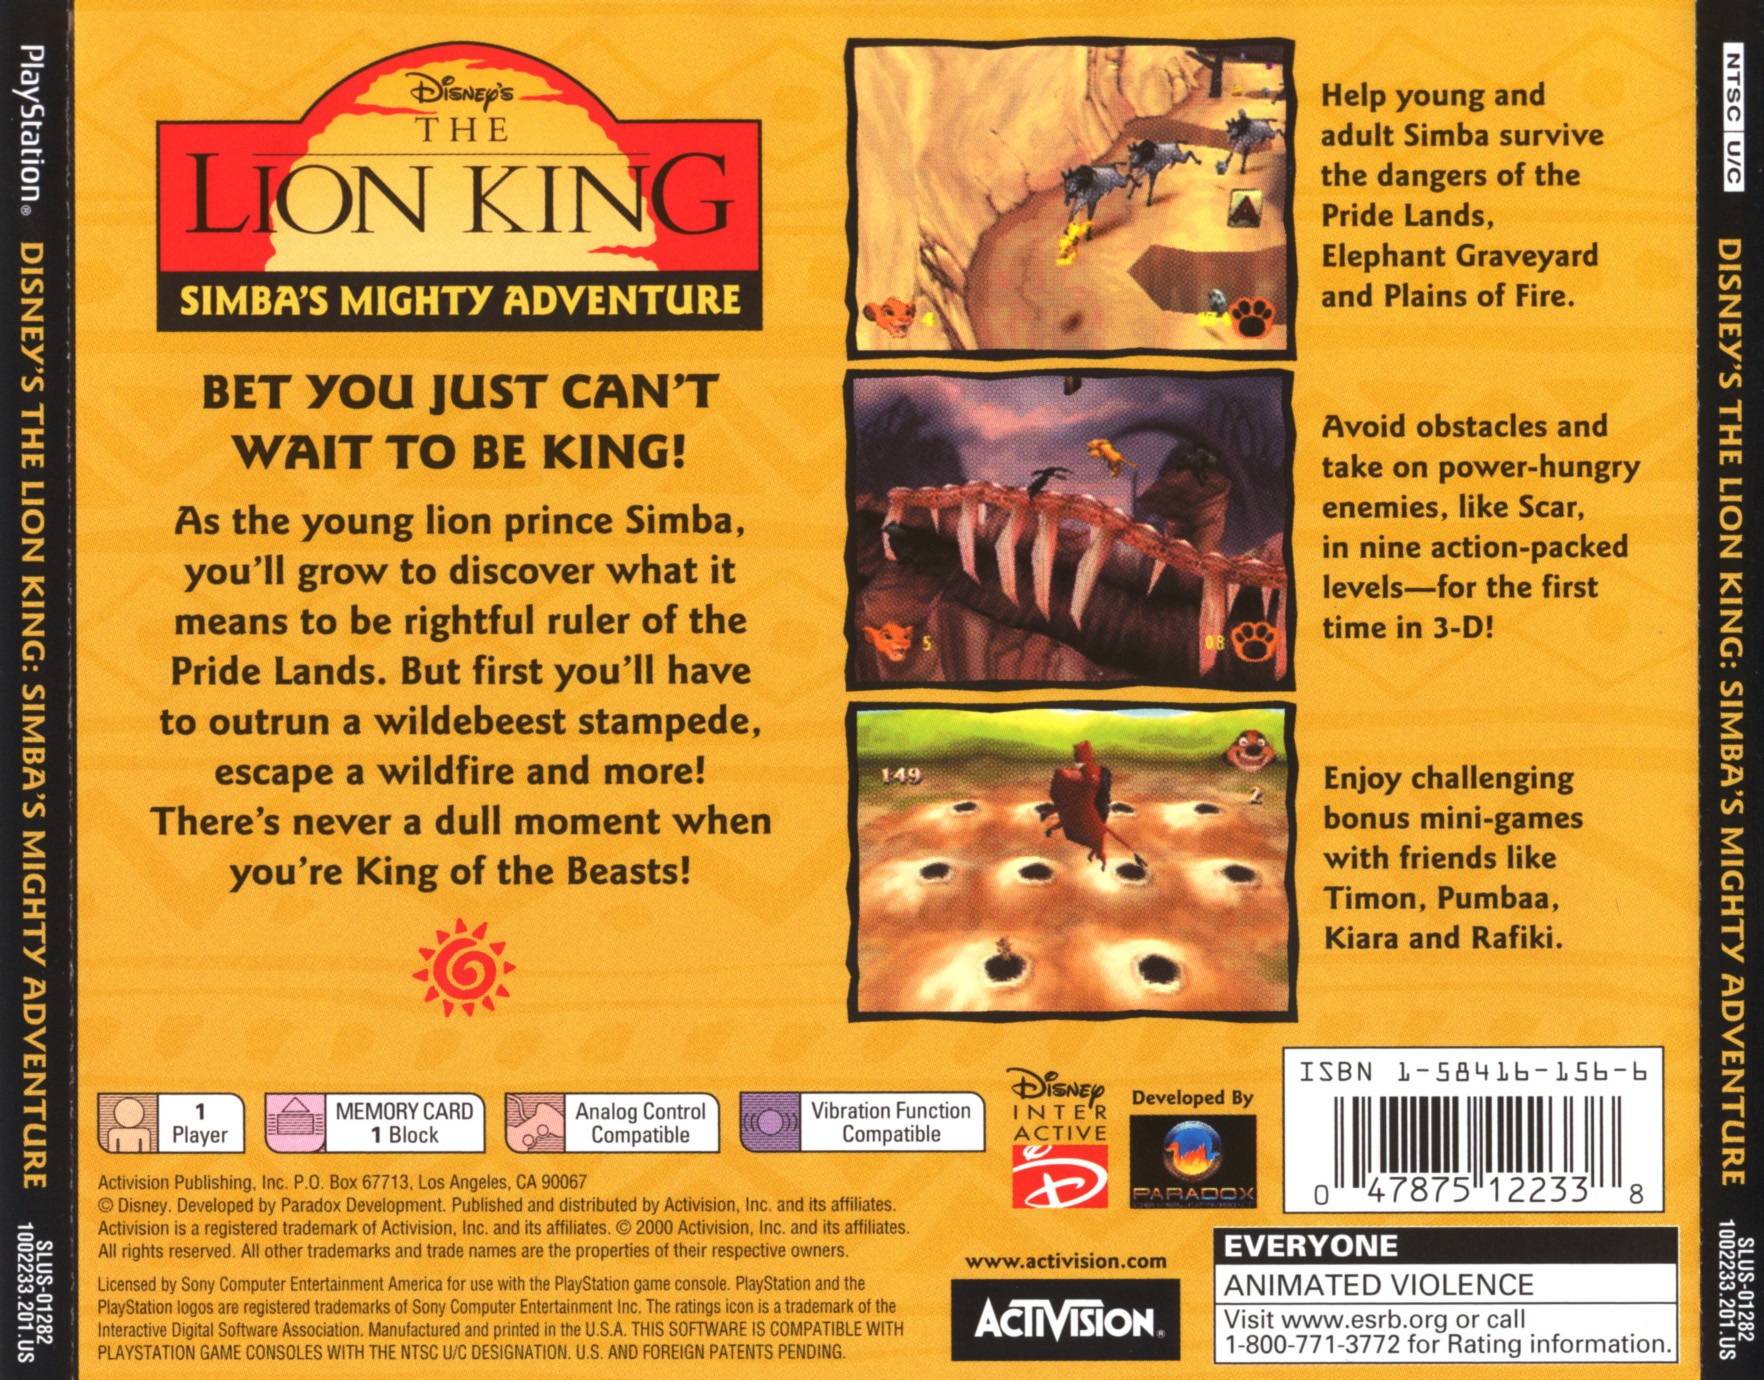 Игры король симба. Lion King Sony PLAYSTATION 1. - Simba's Mighty Adventure ps1. Disney's the Lion King: Simba's Mighty Adventure ps1. Disney's the Lion King - Simba's Mighty Adventure ps1 обложка.